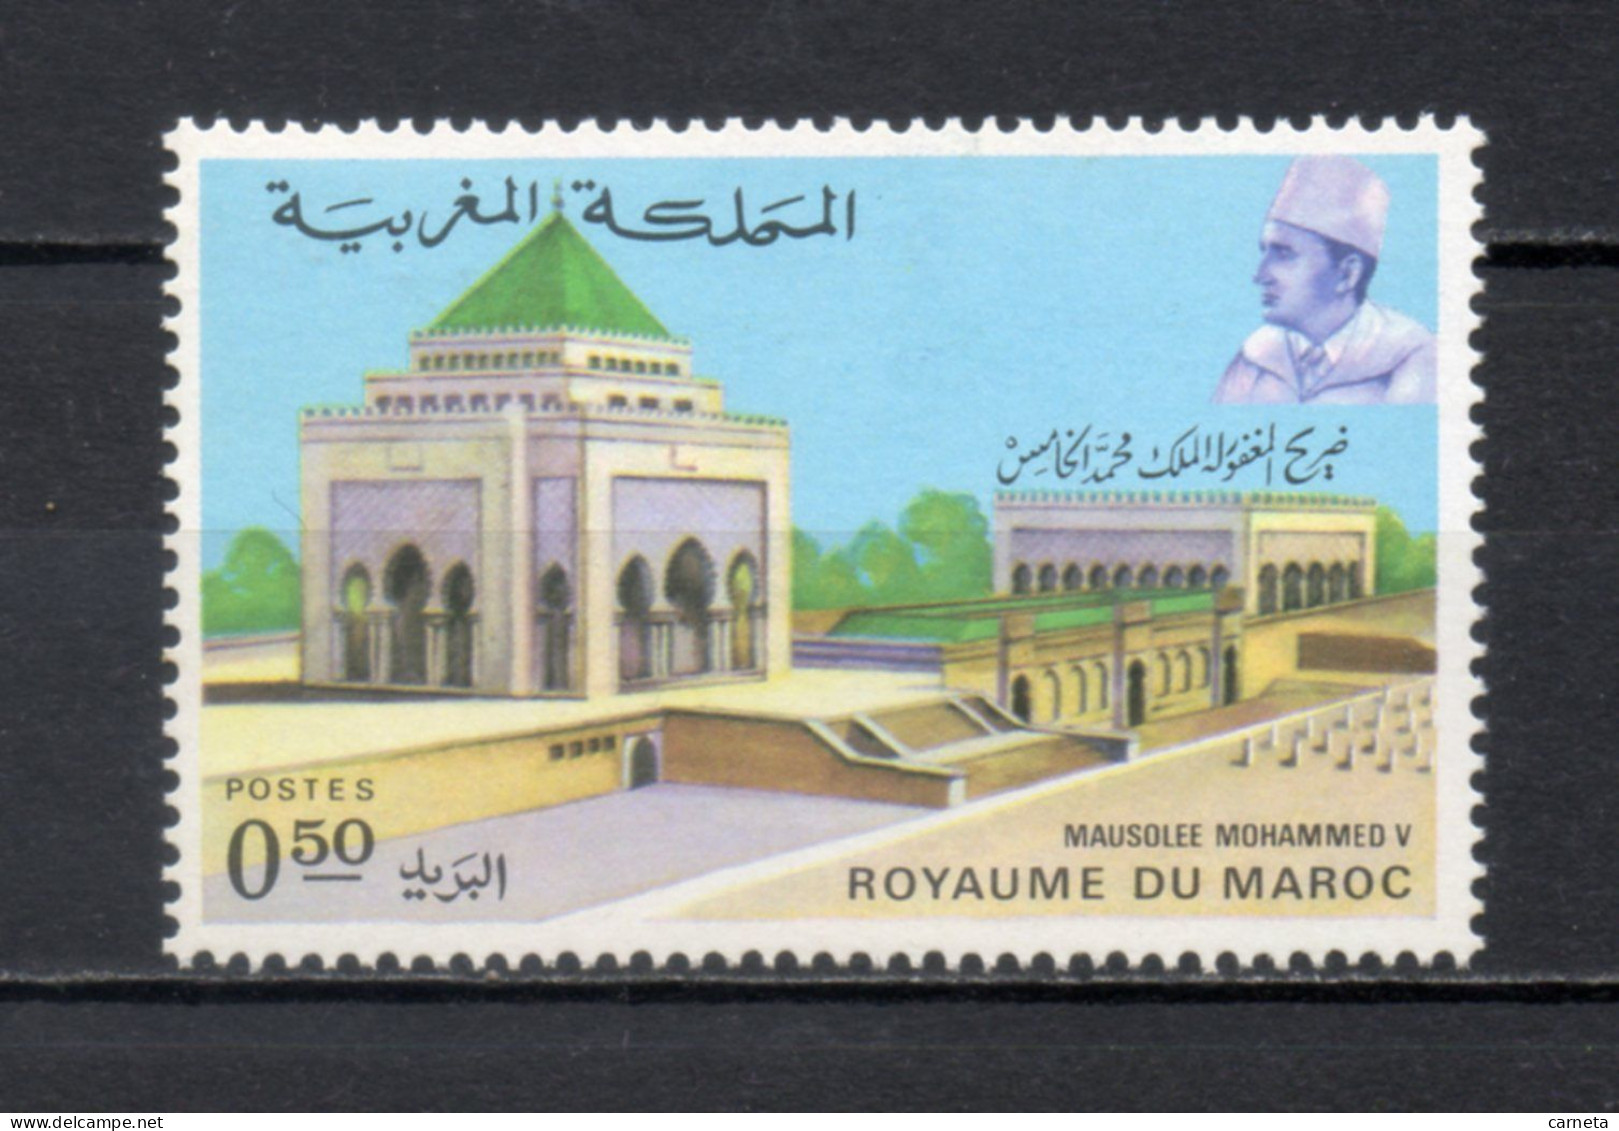 MAROC N°  623   NEUF SANS CHARNIERE  COTE  0.70€   MAUSOLEE DE MOHAMED V - Marokko (1956-...)